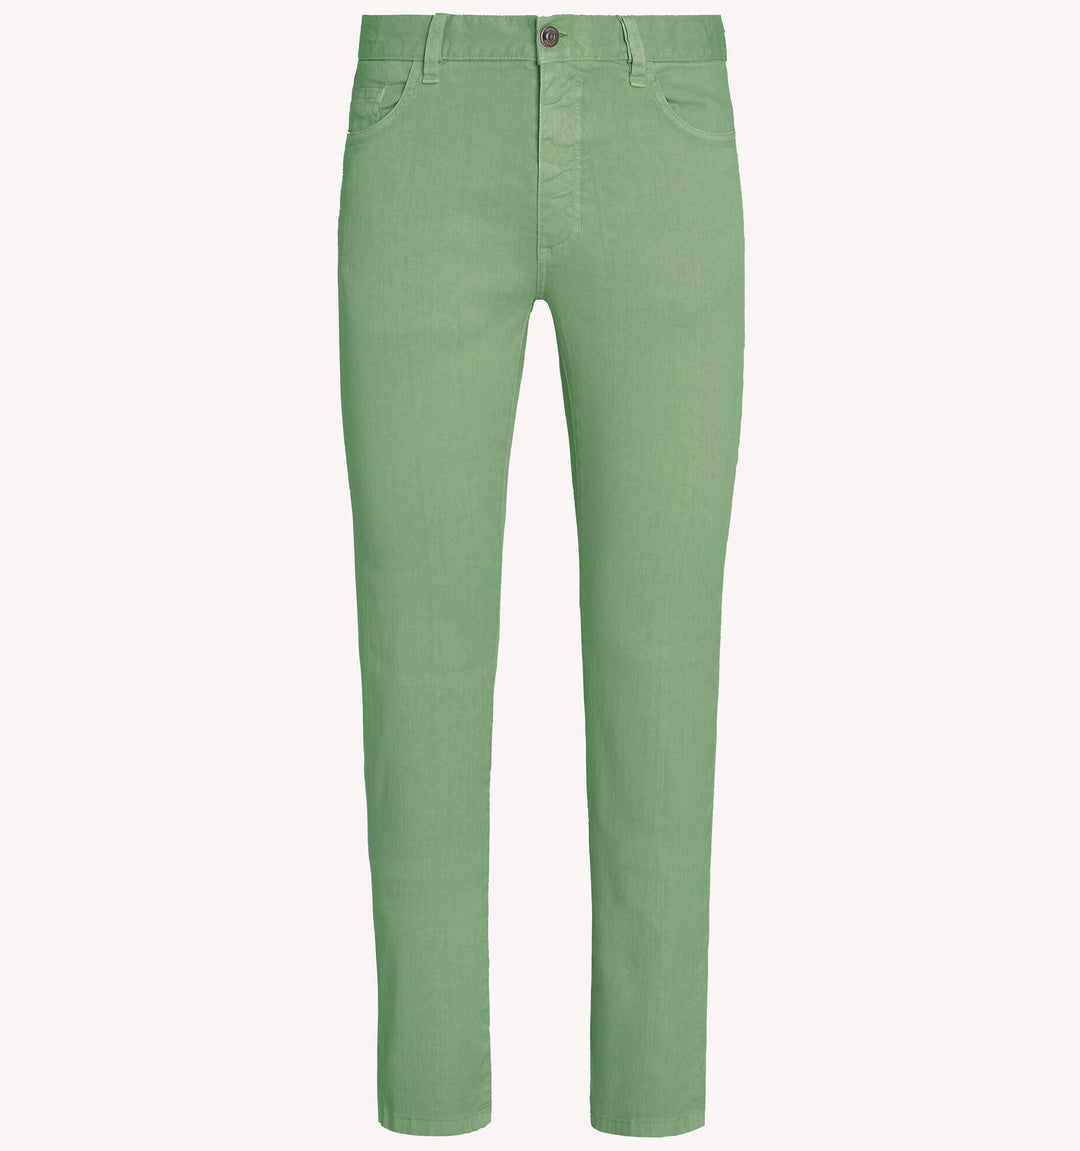 Zegna Gan 5-Pocket Pant in Green